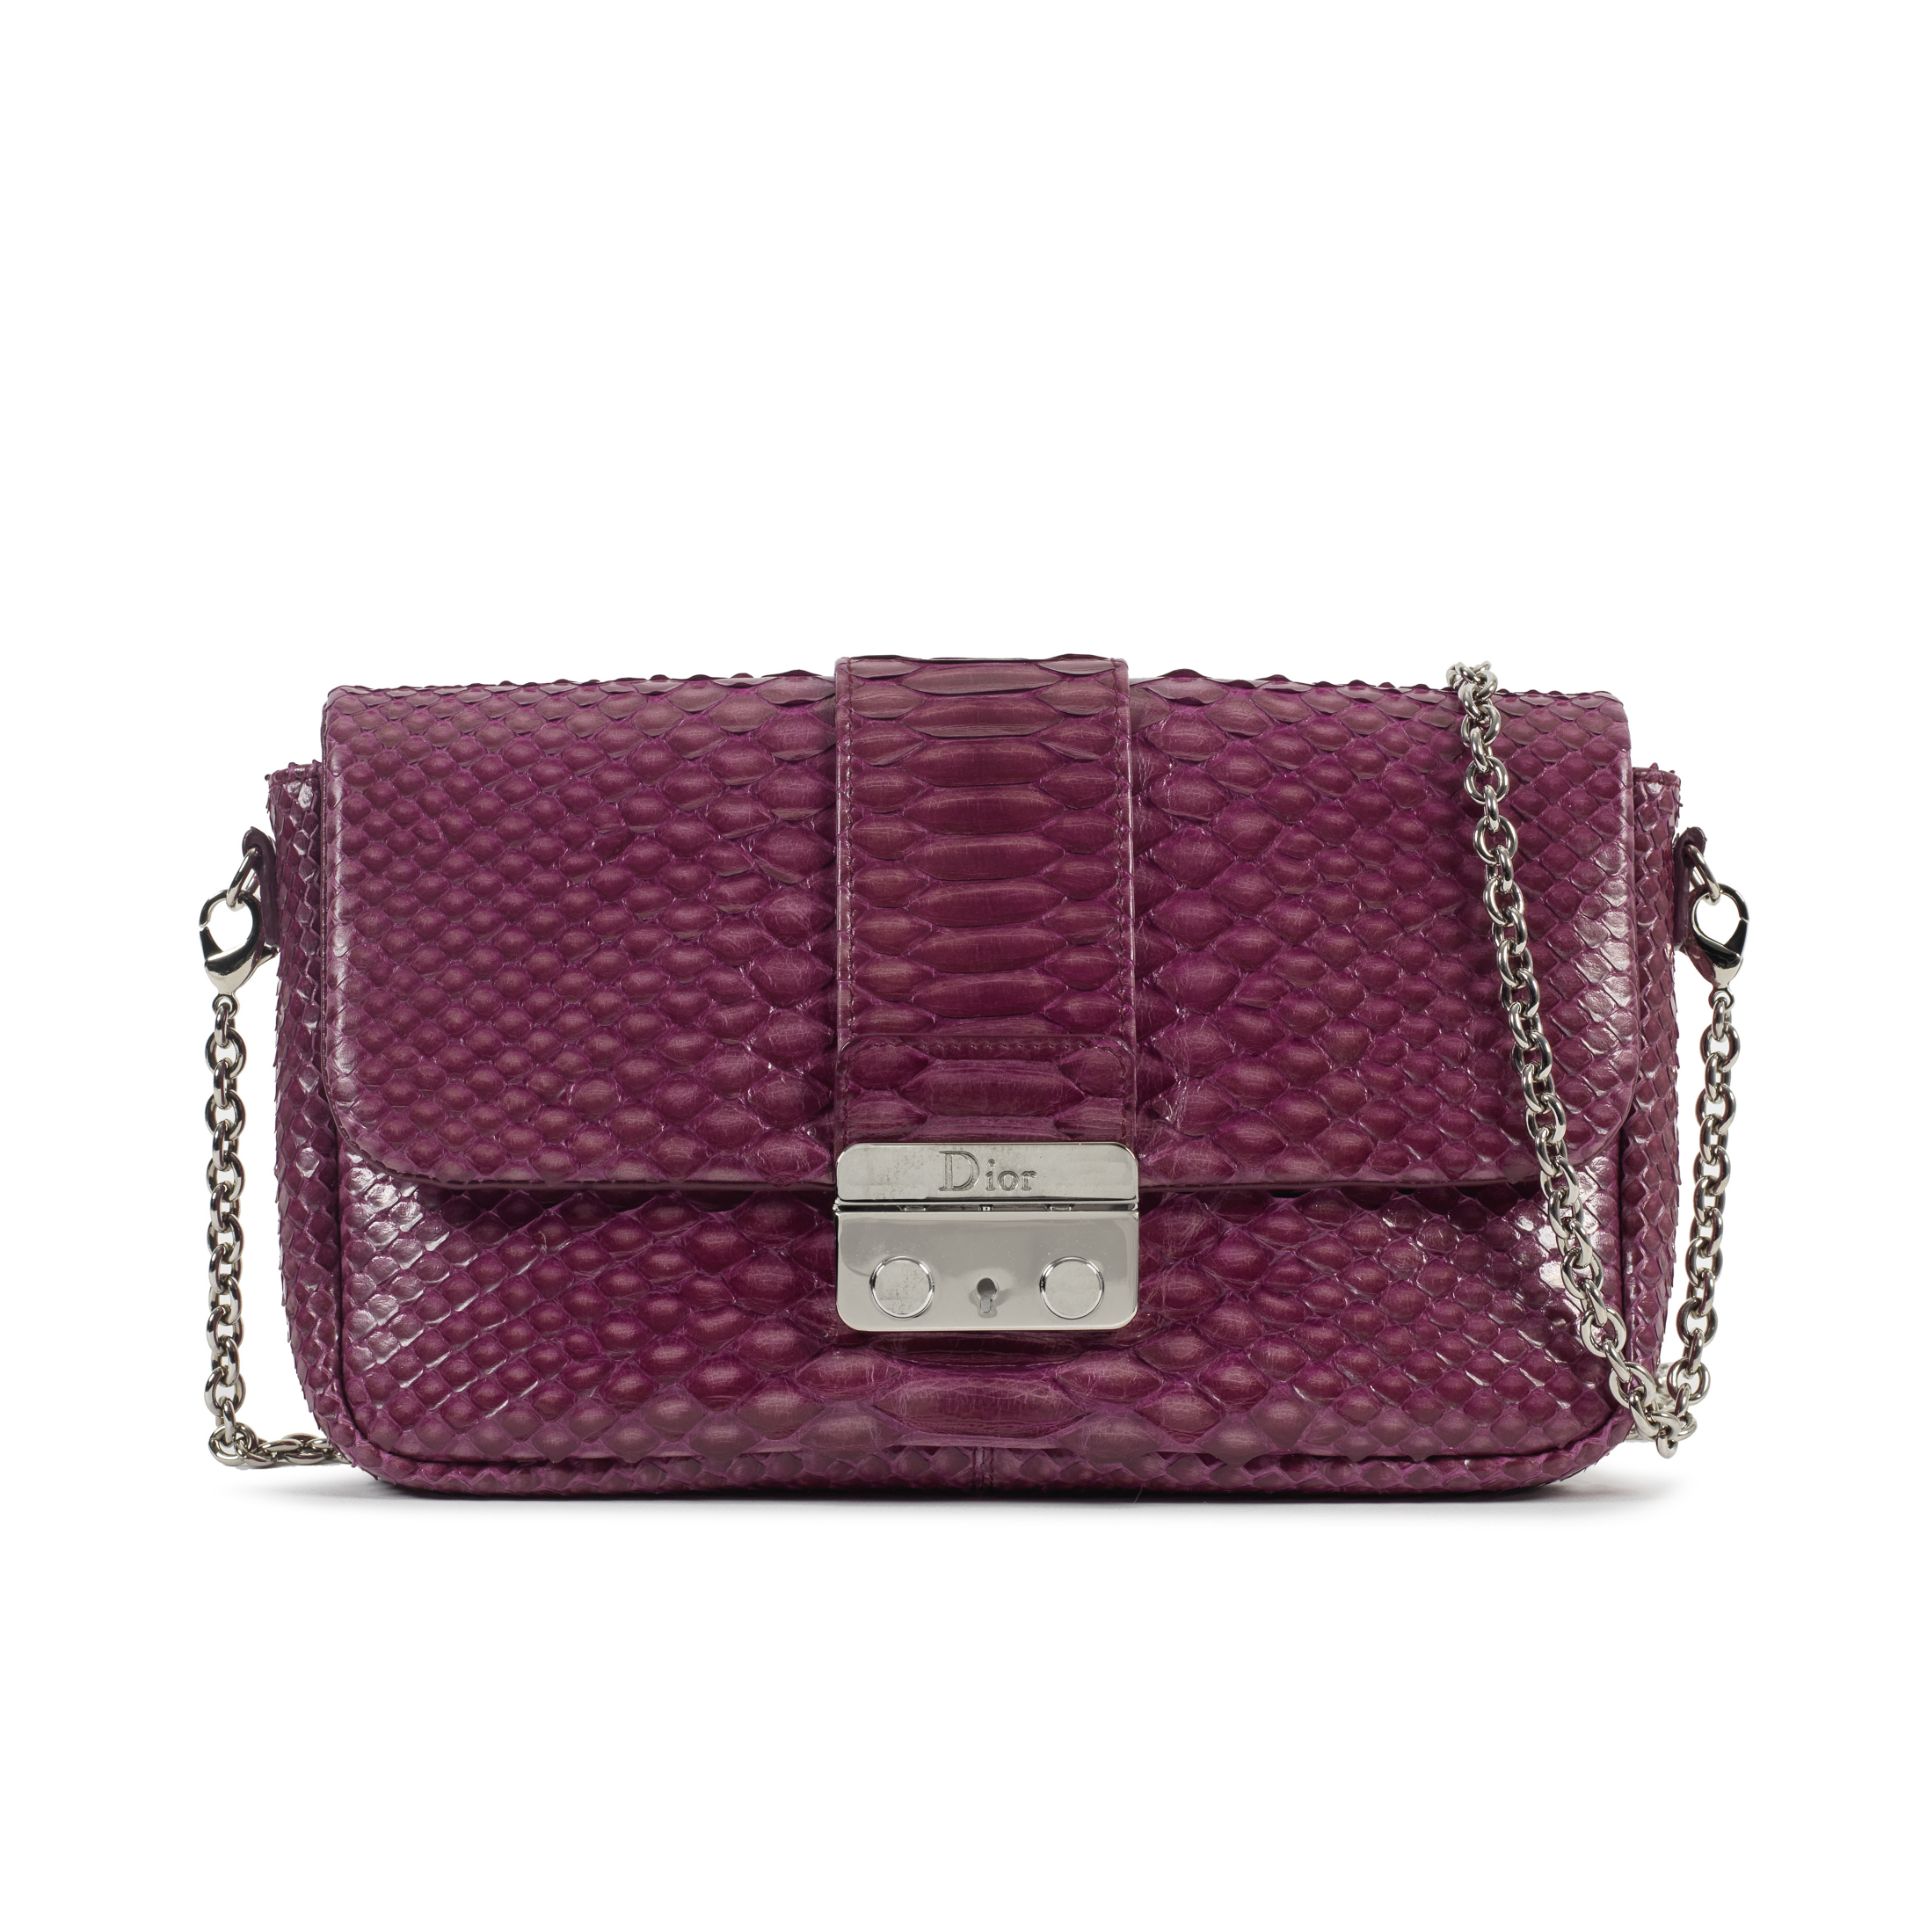 Christian Dior: a Raspberry Pink Python Miss Dior Bag 2010 (includes dust bag)